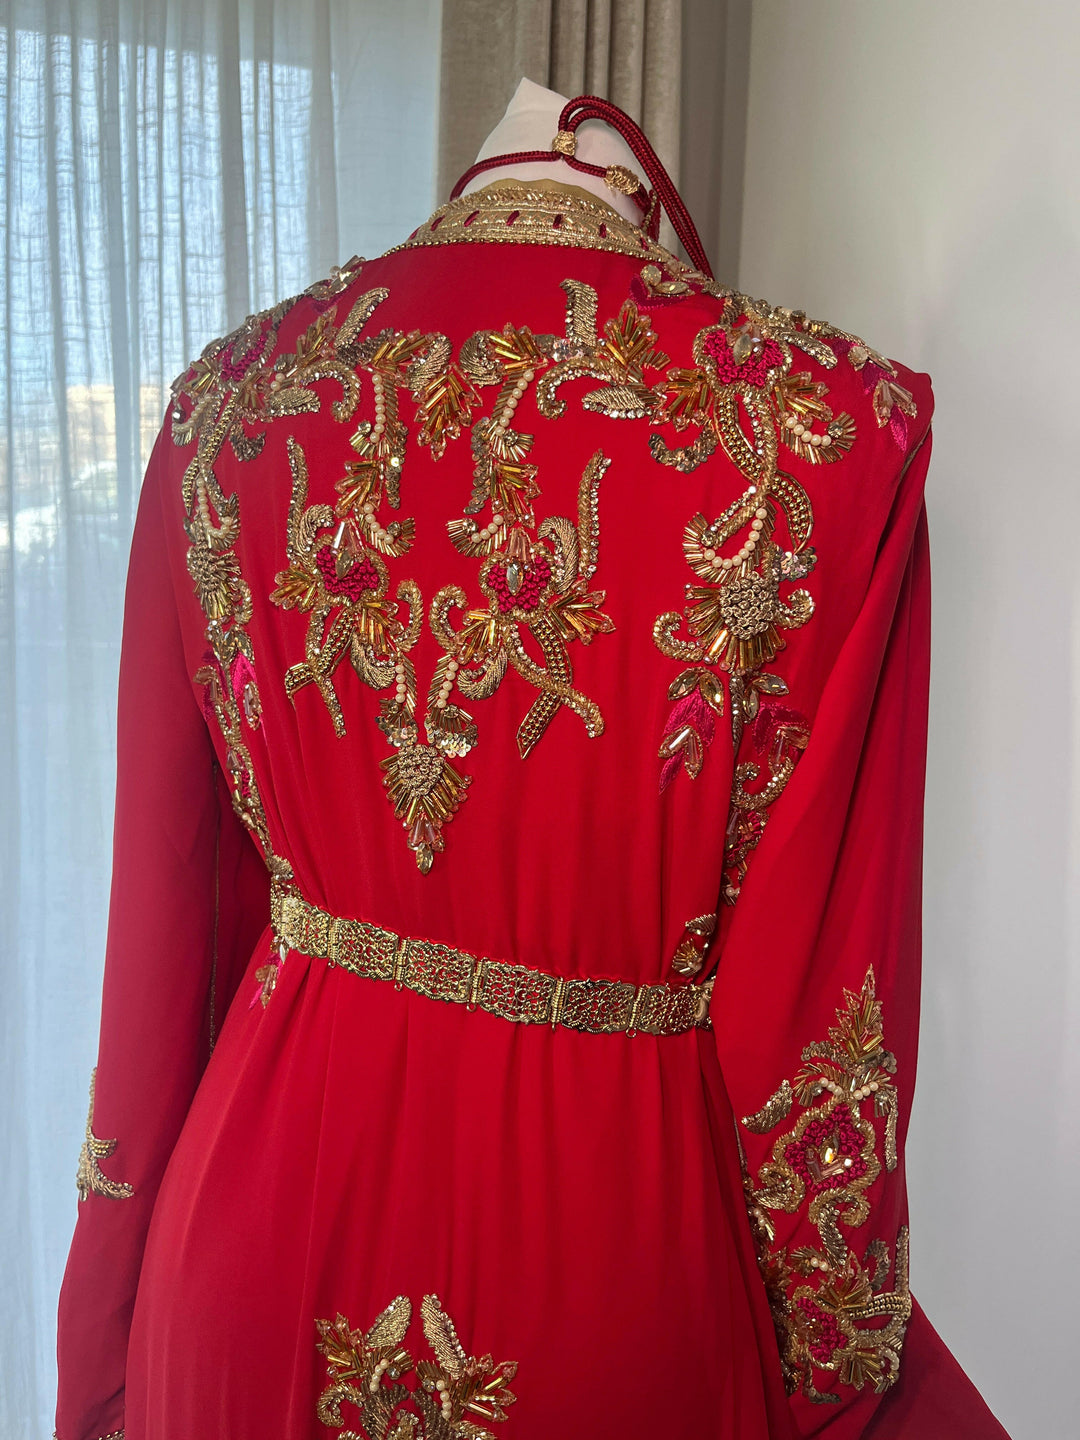 elegant lebsa takshita moroccan dress nikah nikkah mariage marocain